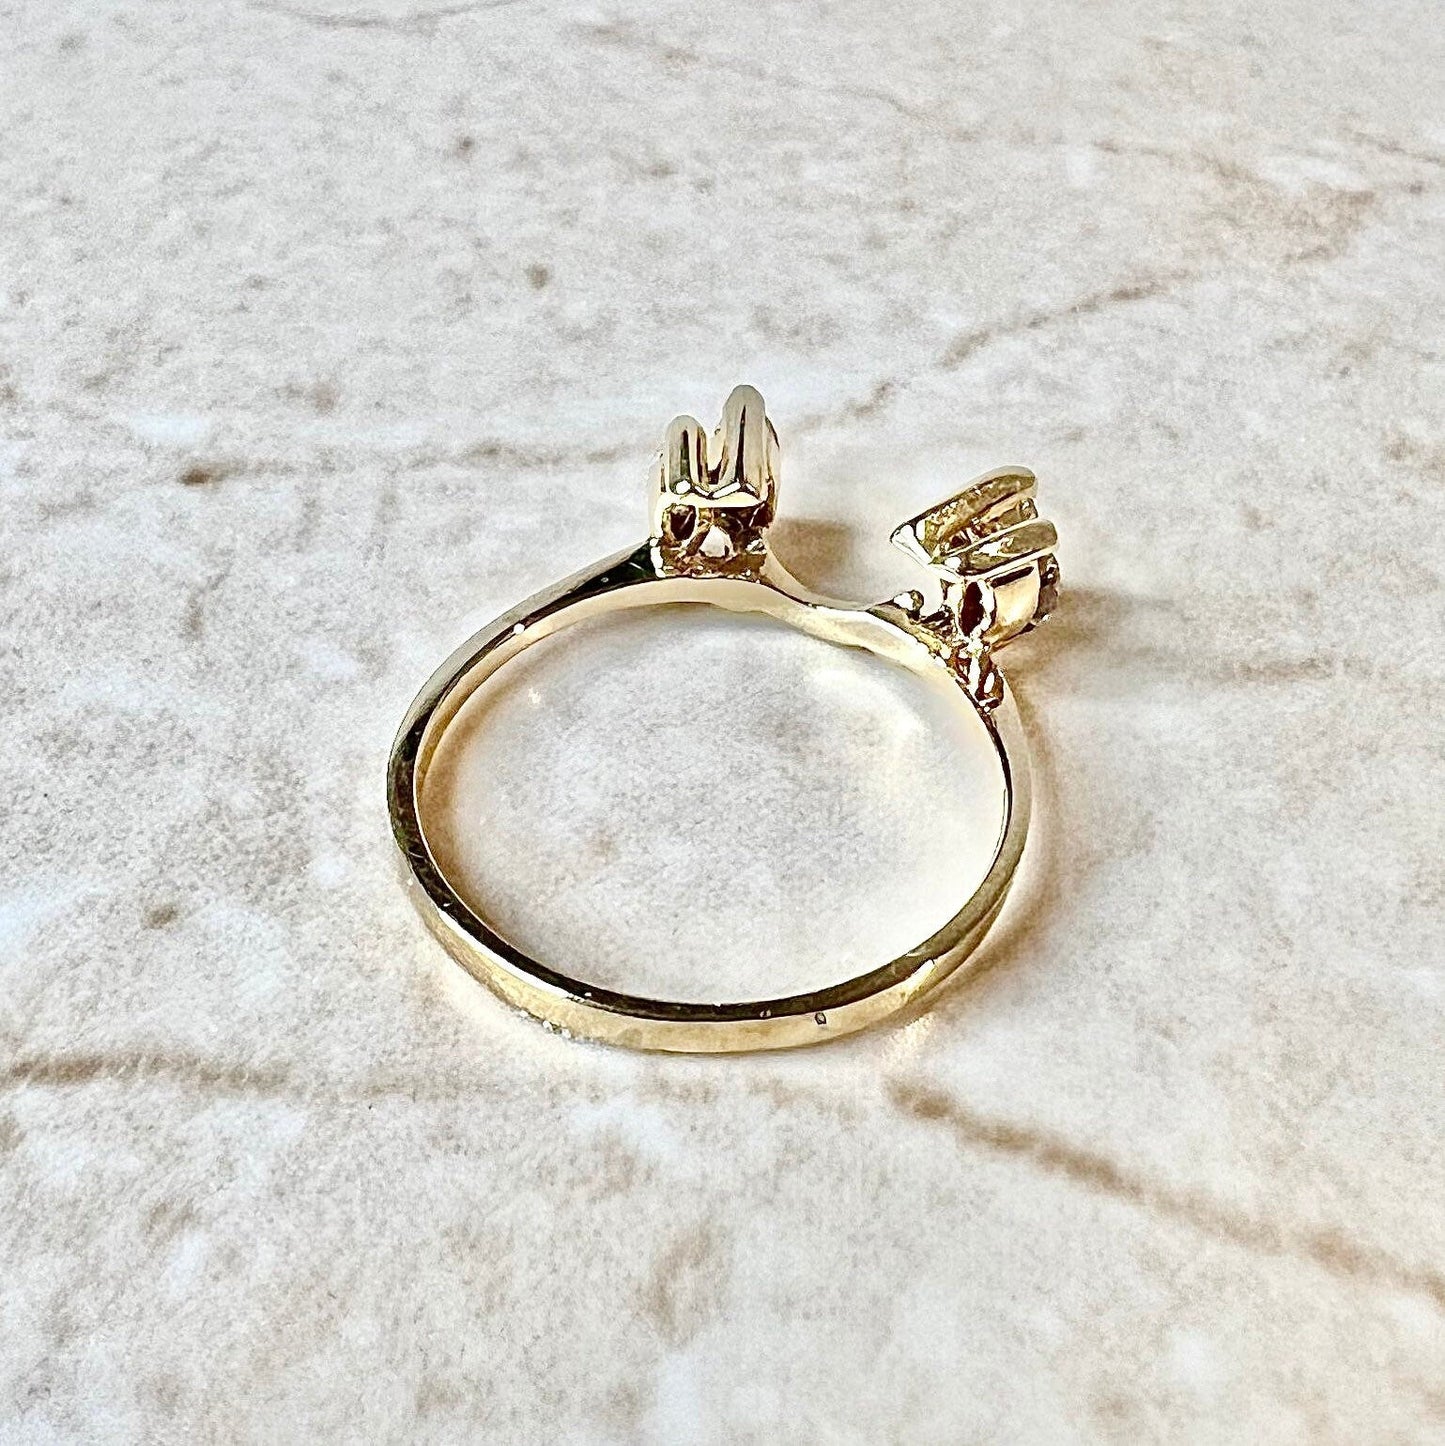 14K Diamond Jacket Ring - Yellow Gold Jacket Ring - Wedding Ring Set - Diamond Enhancer - Engagement Ring - Anniversary Gift - Gifts For Her